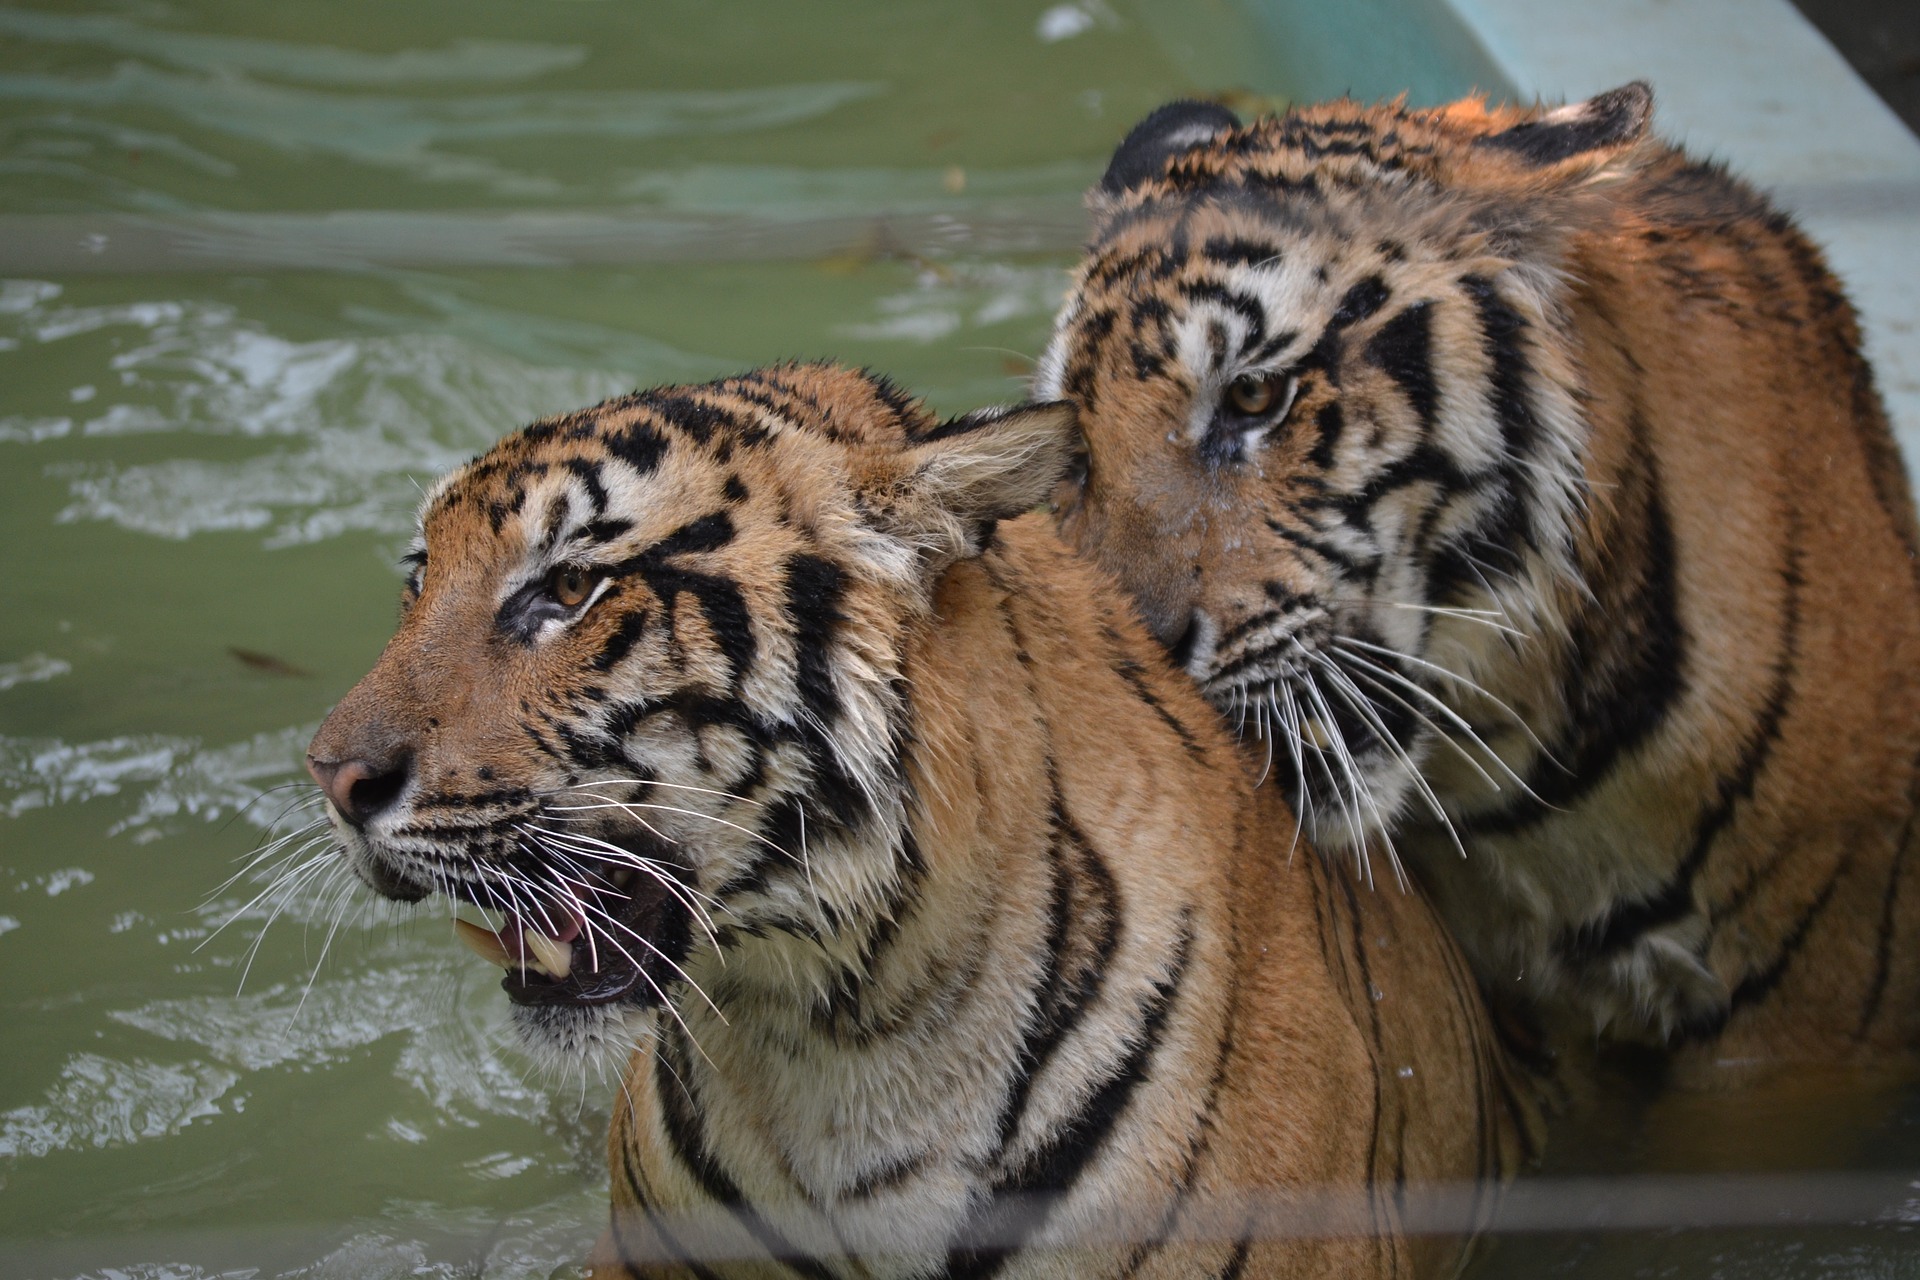 Thailand tigers